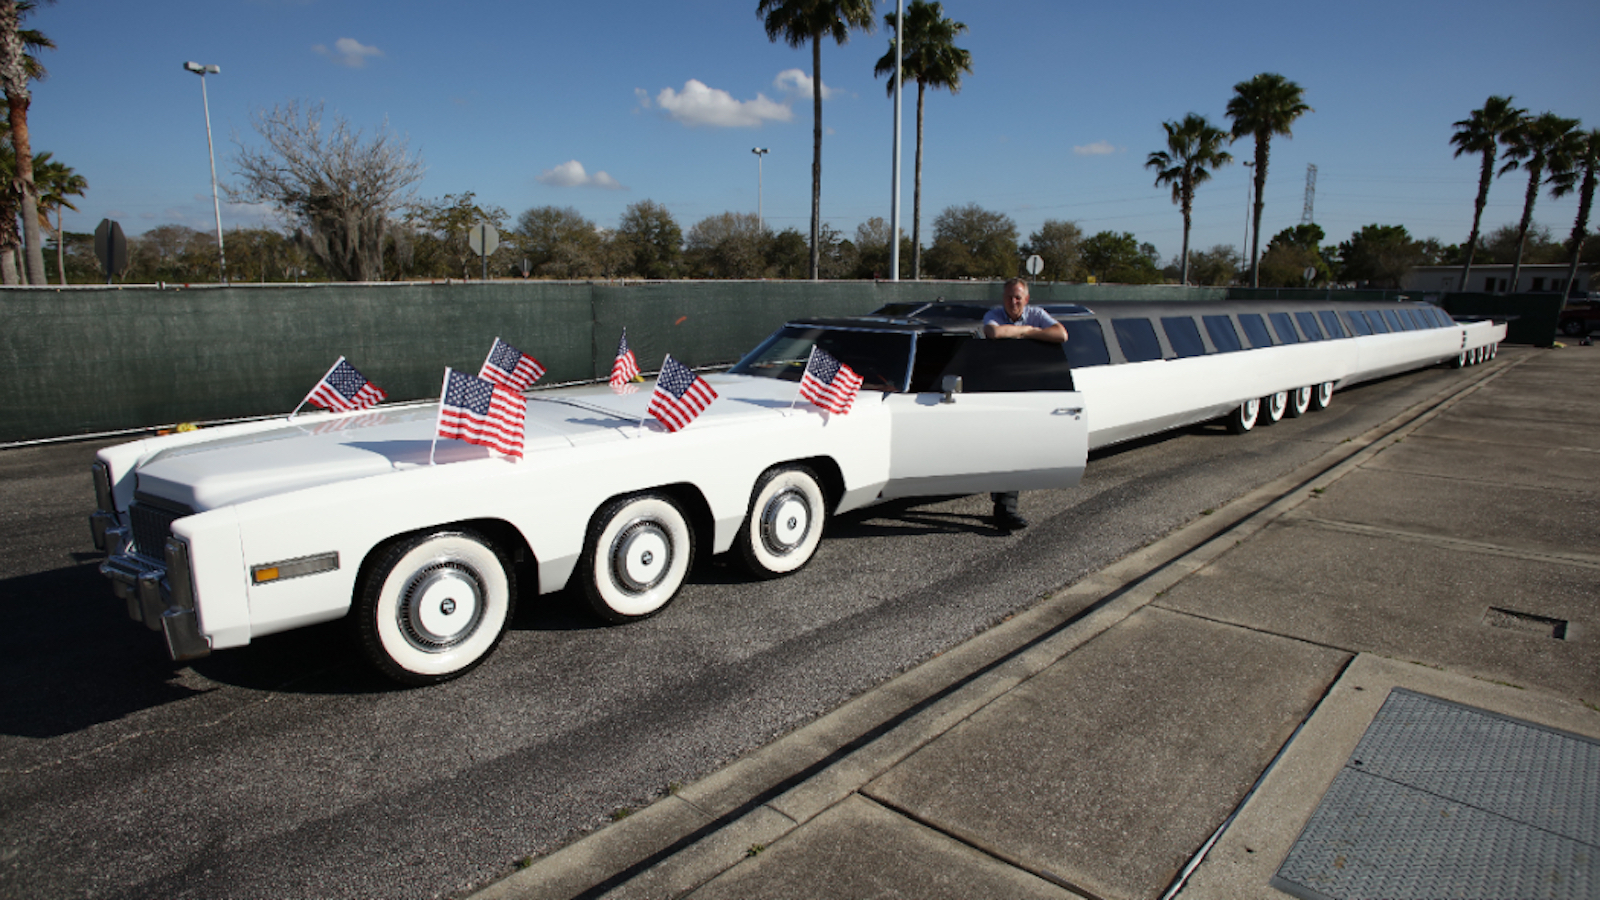 The World’s Longest Car: ‘The American Dream’